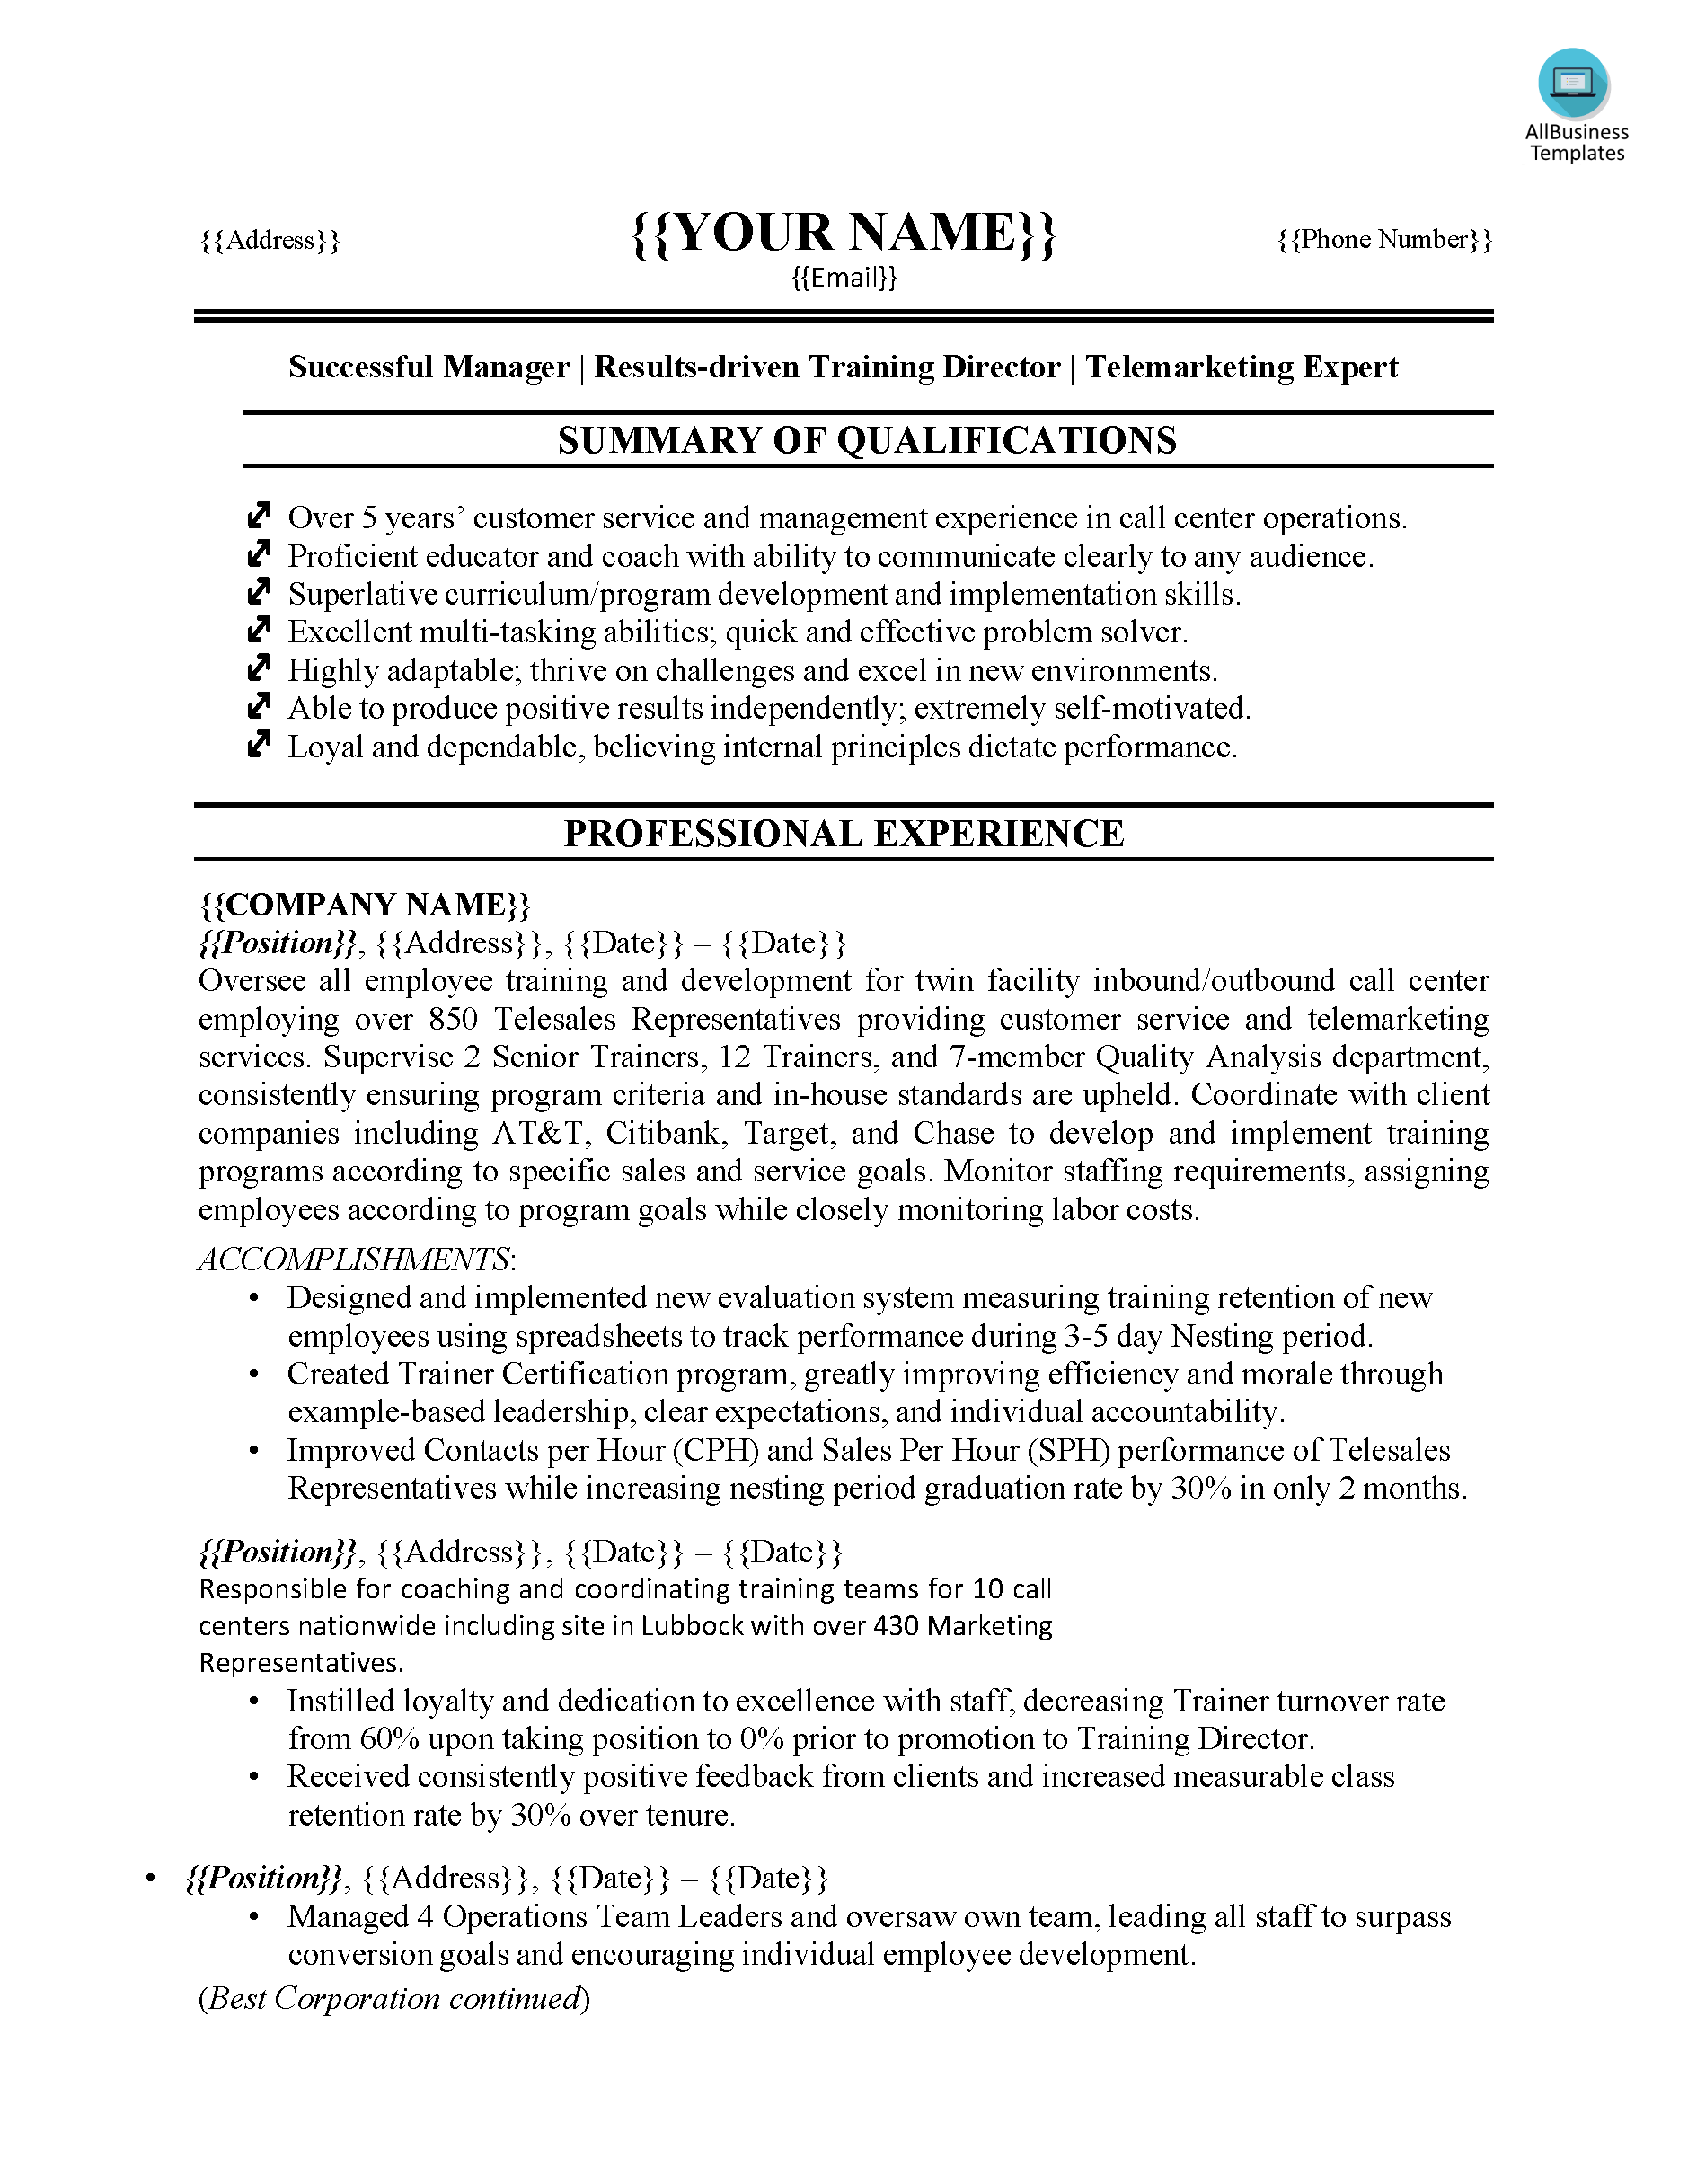 sample resume for customer service